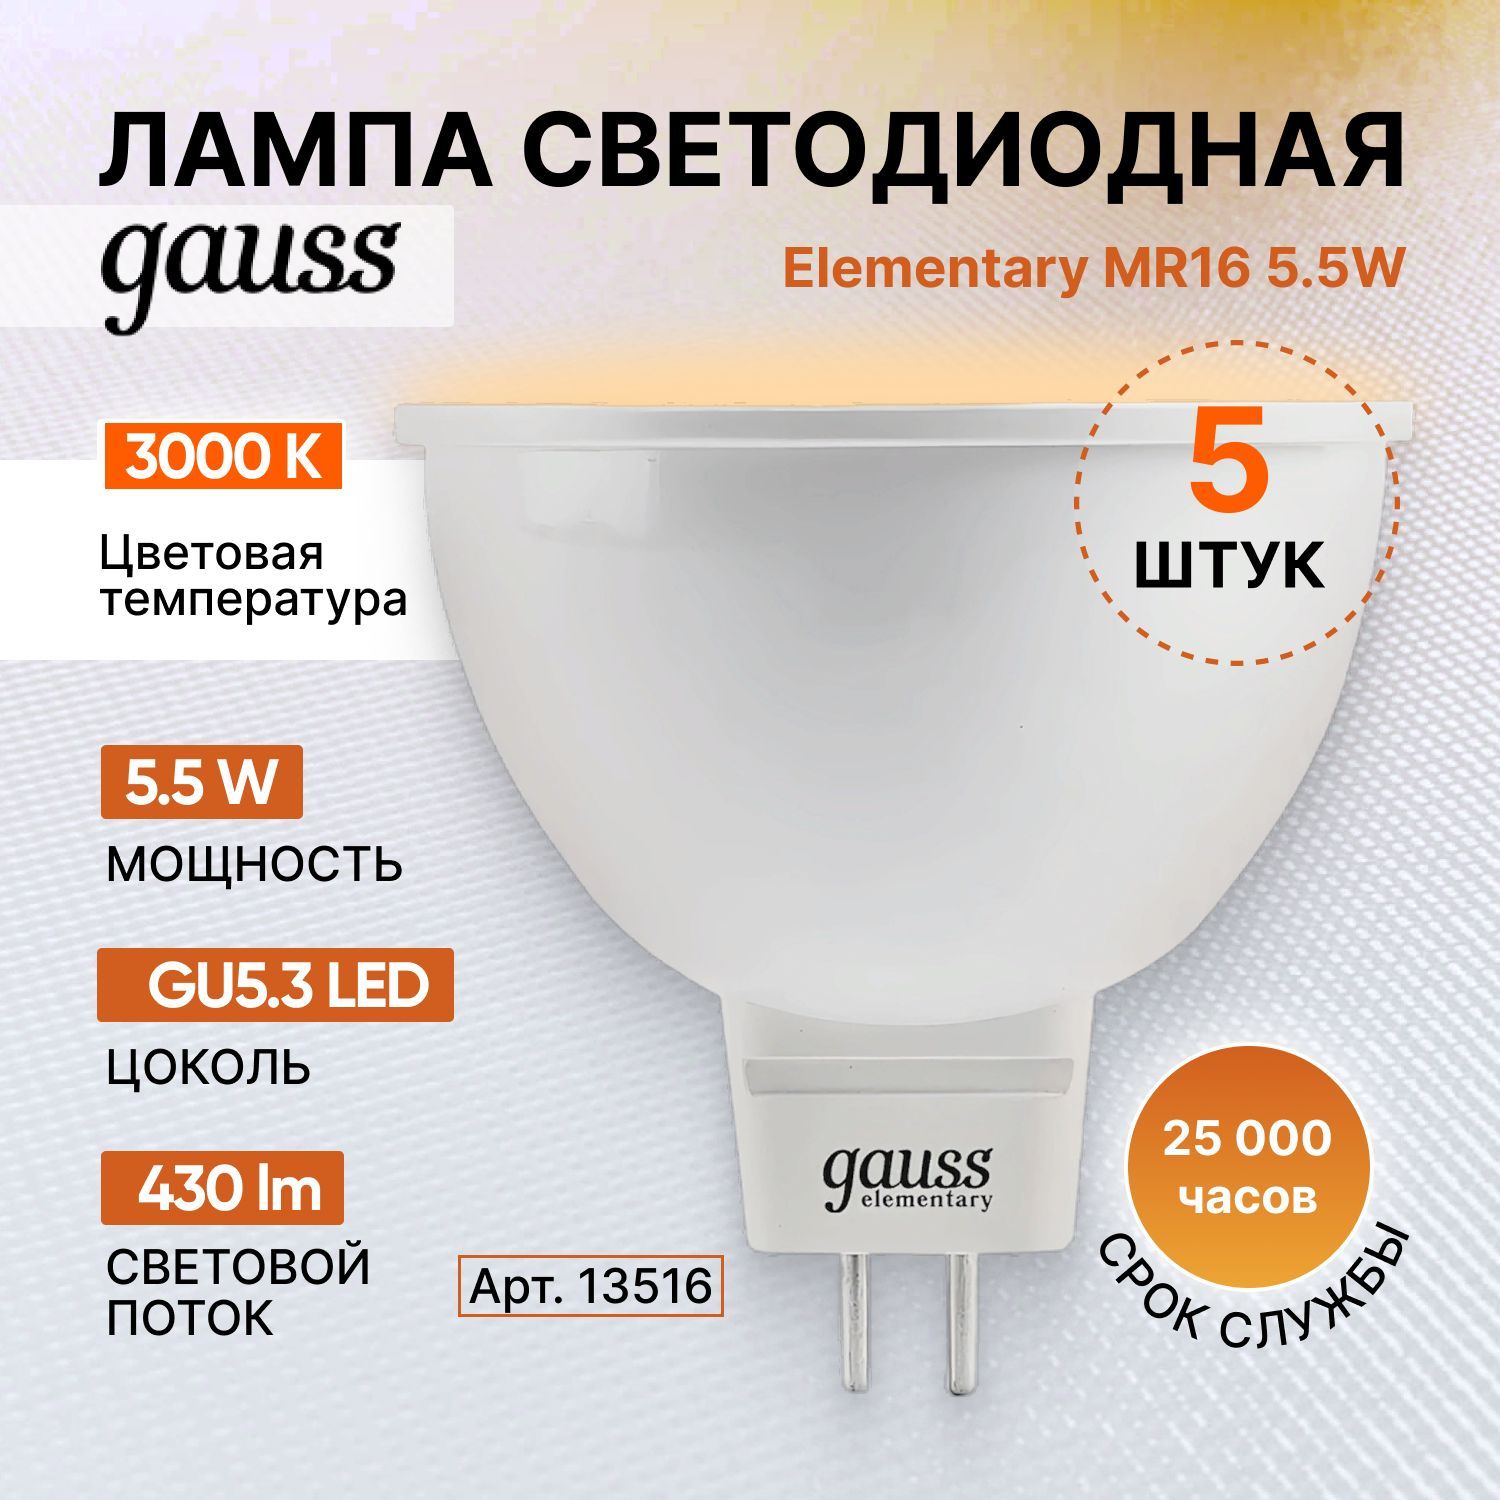 Лампа Gauss led 7w 100-240v 50-60hz. Софит лампа светодиодная. Gauss Elementary logo. Gauss elementary mr16